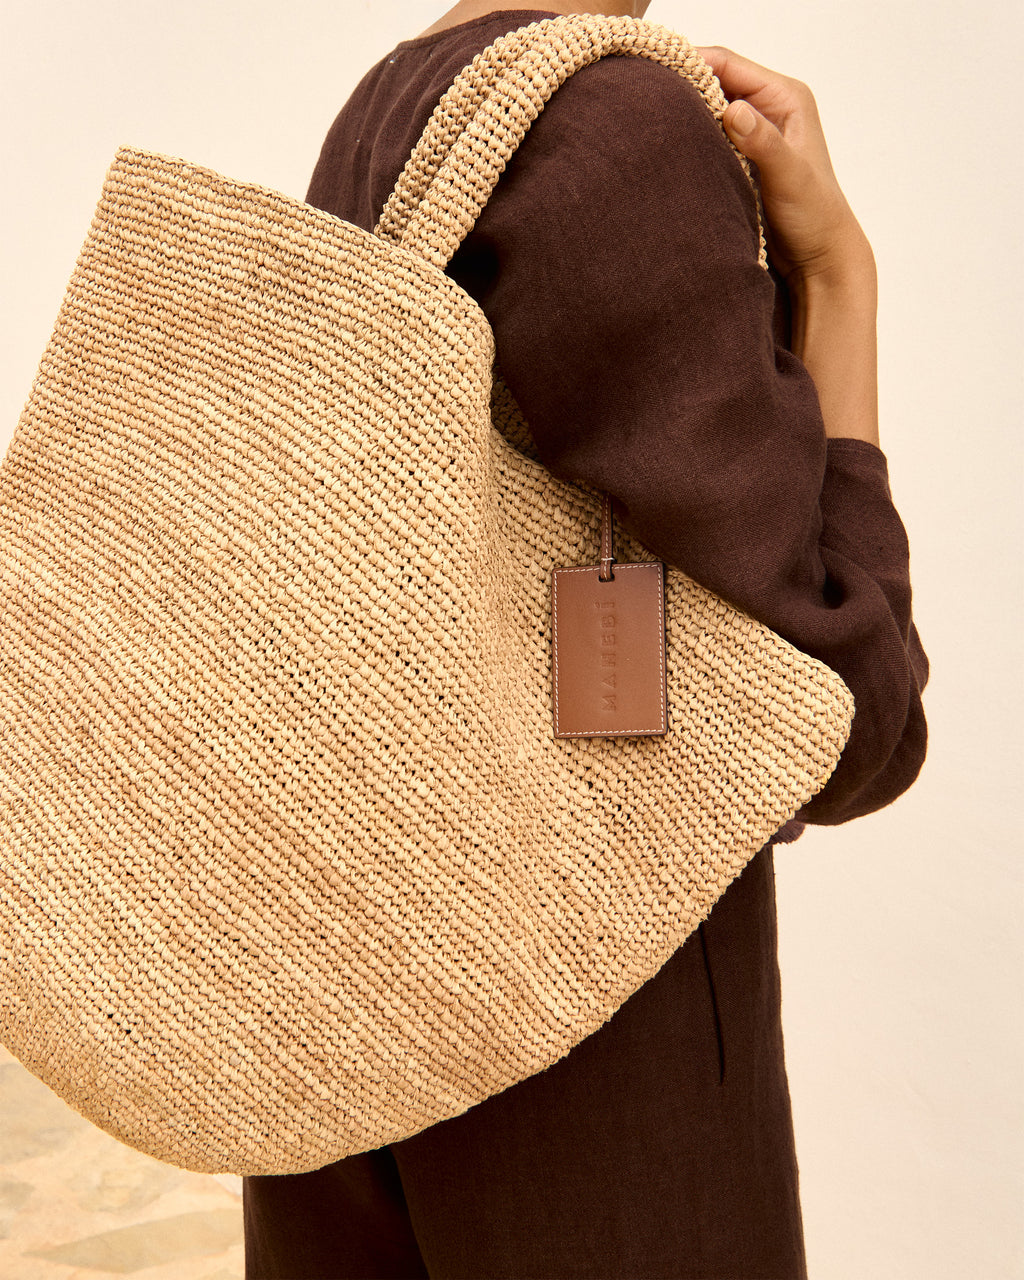 Raffia Summer Bag - Leather Handle & Palm Leather Tag Tan